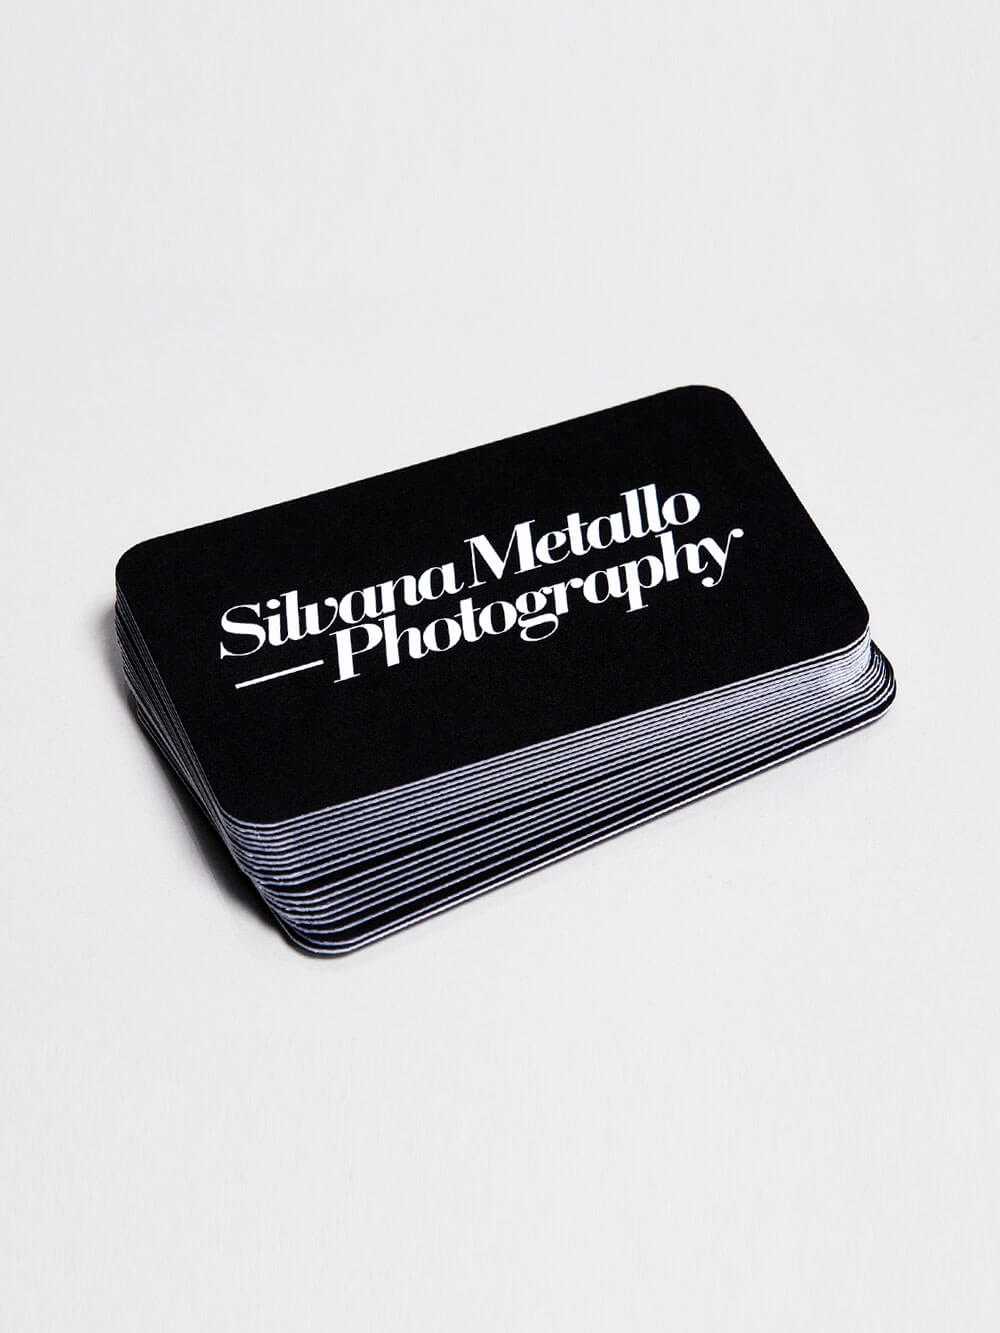 Silvana-Metallo-Business-Cards-2-1000px